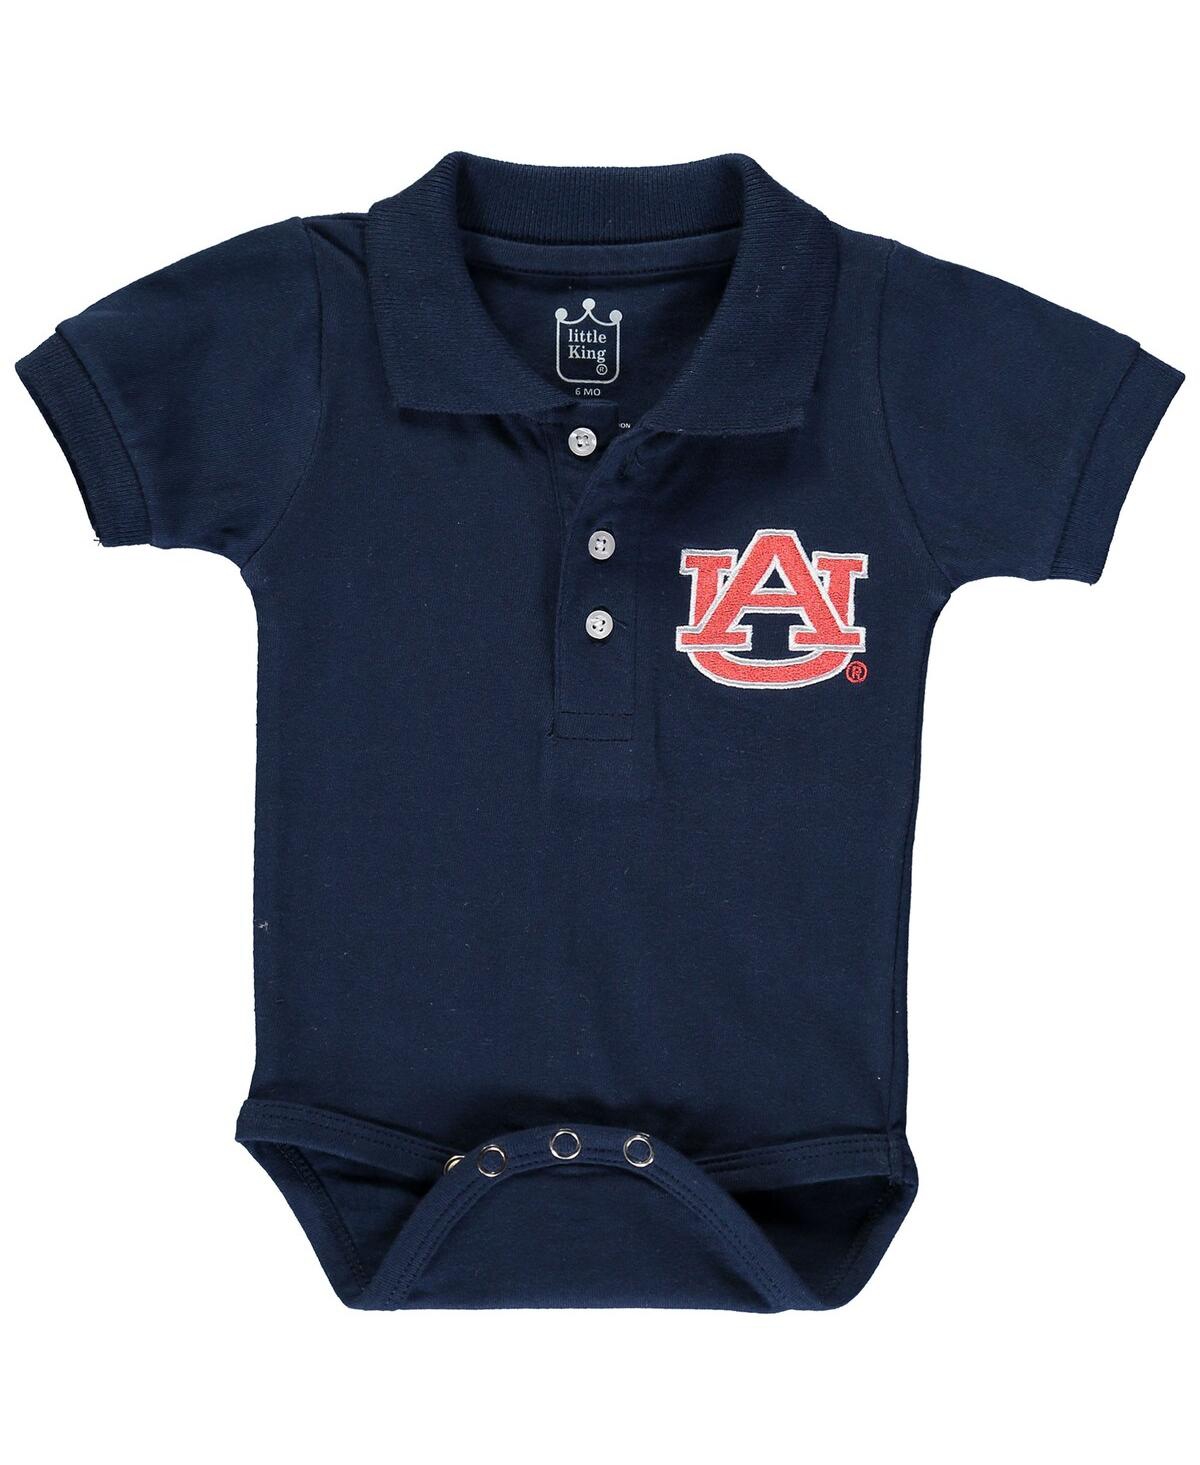 Little King Apparel Babies' Infant Boys And Girls Navy Auburn Tigers Polo Bodysuit